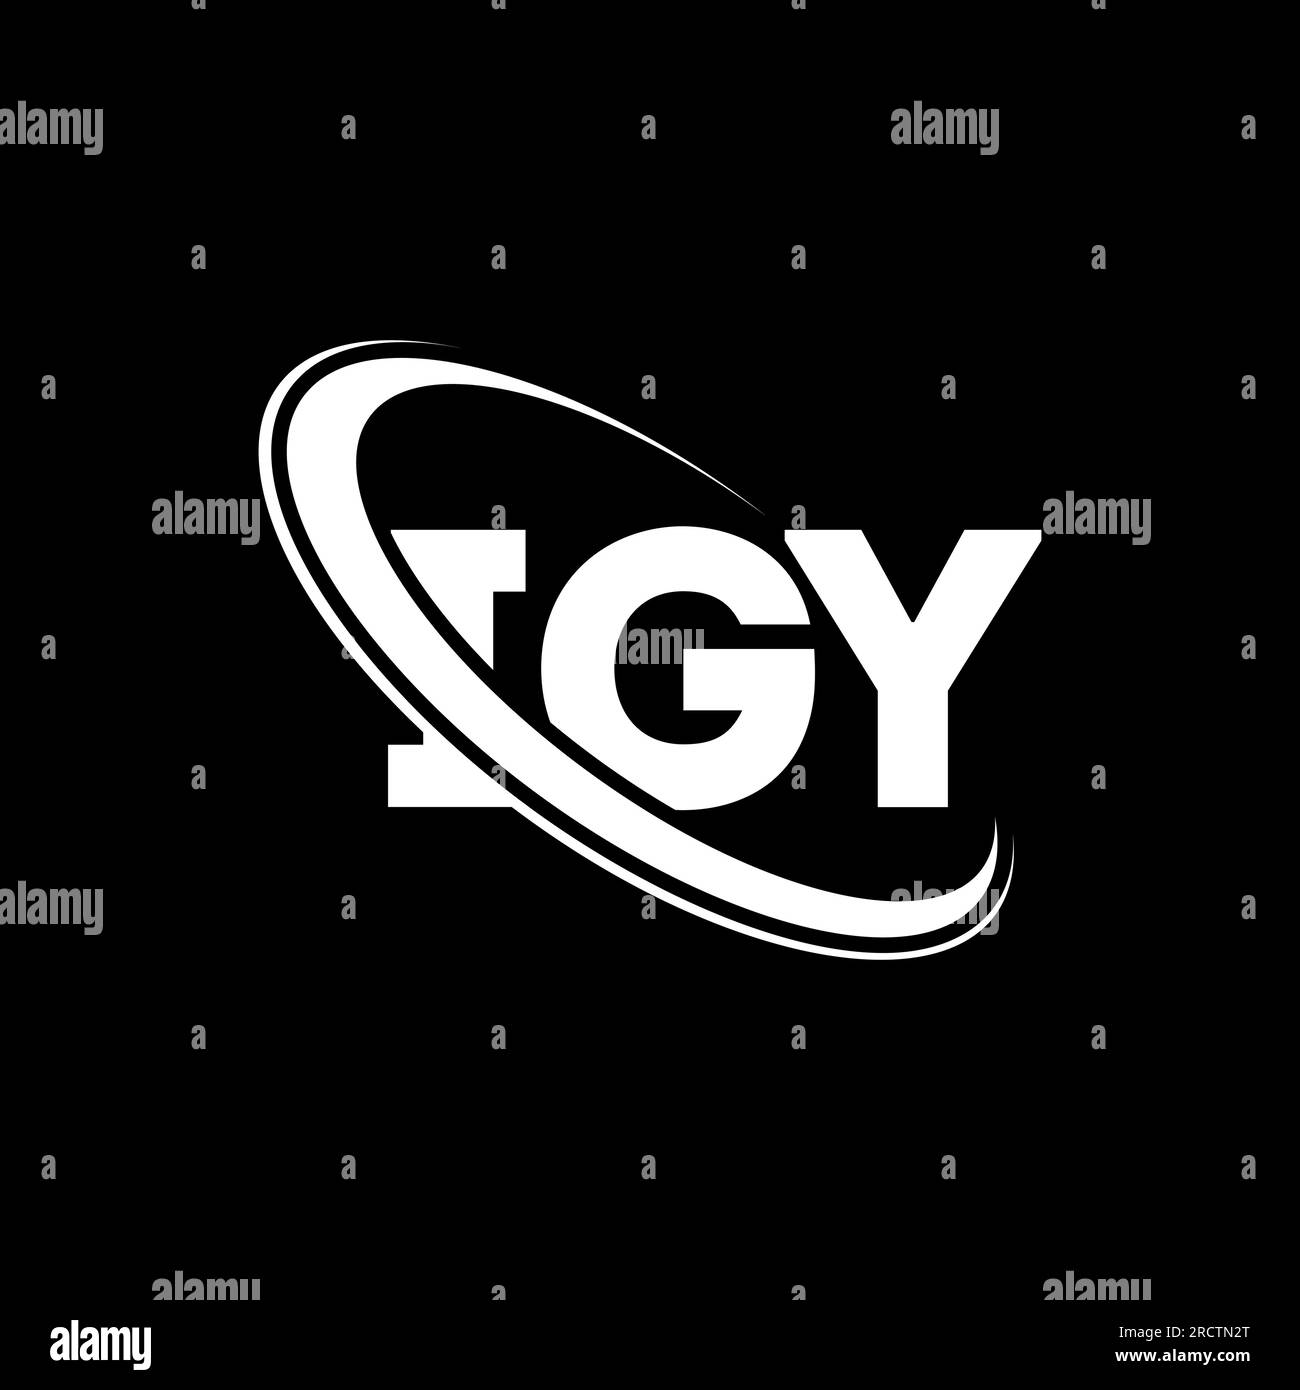 Igy circle logo hi-res stock photography and images - Alamy